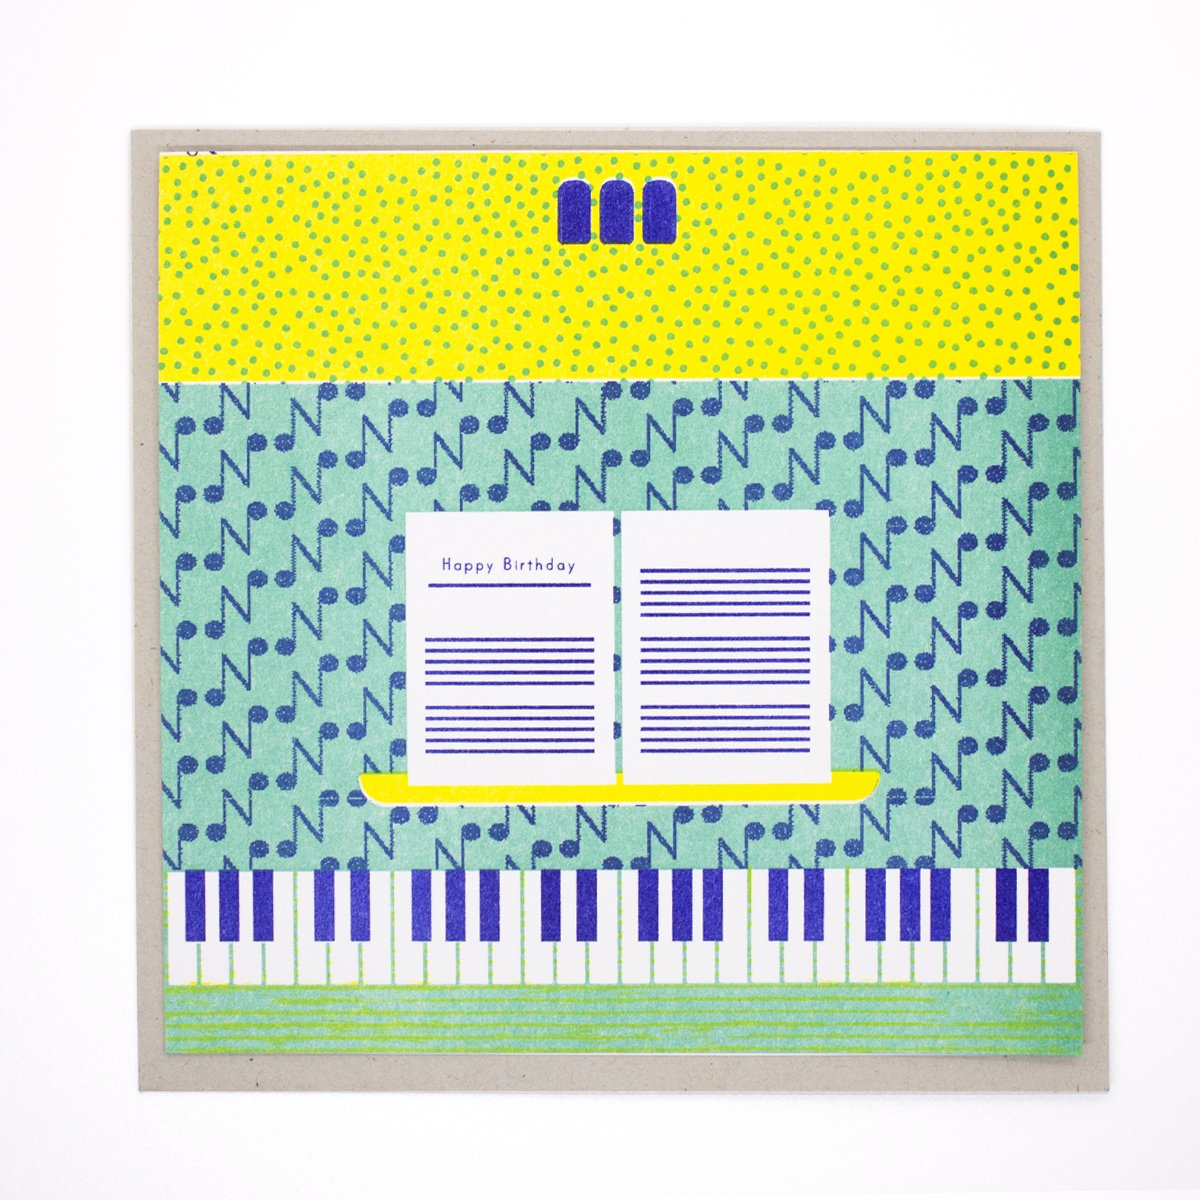 Bomull Press Birthday Card - Origami Piano A